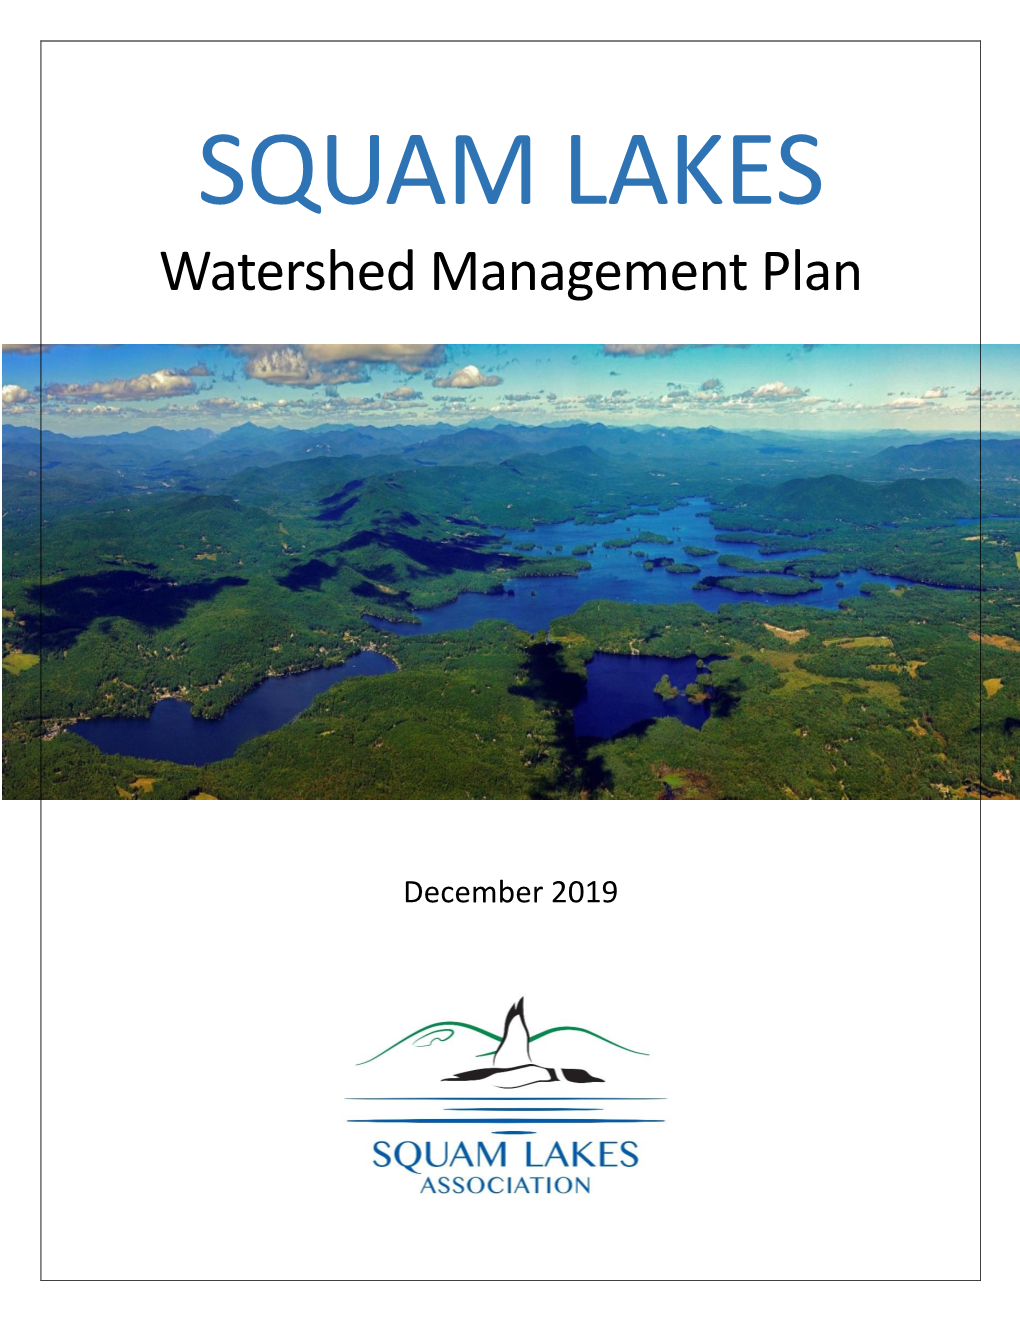 2019 Watershed Management Plan